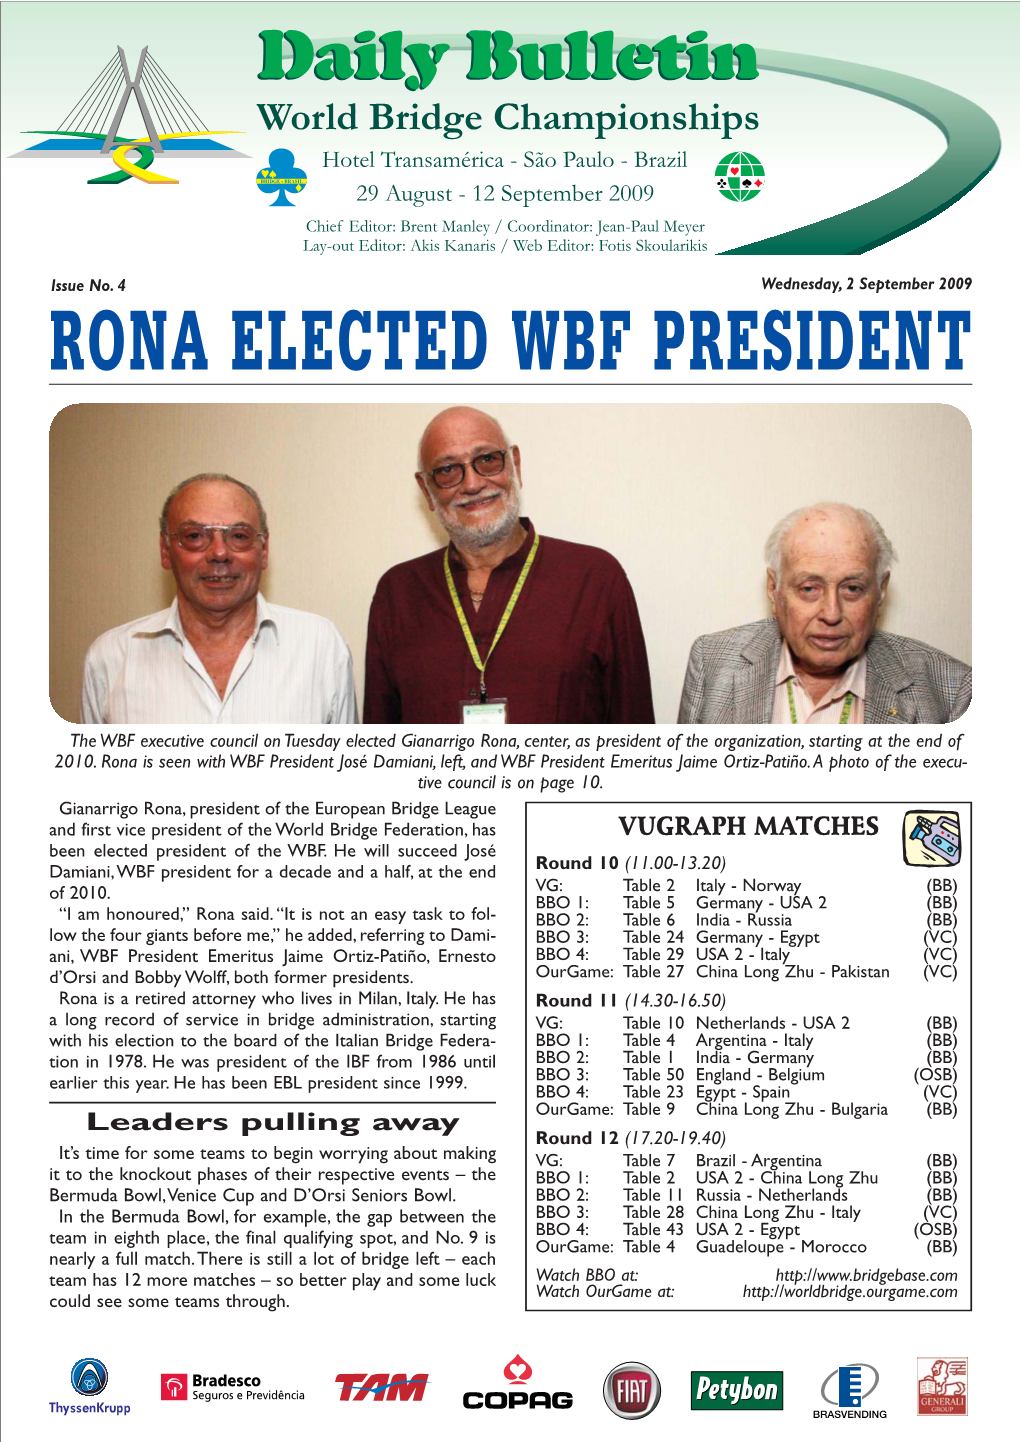 Rona Elected Wbf President